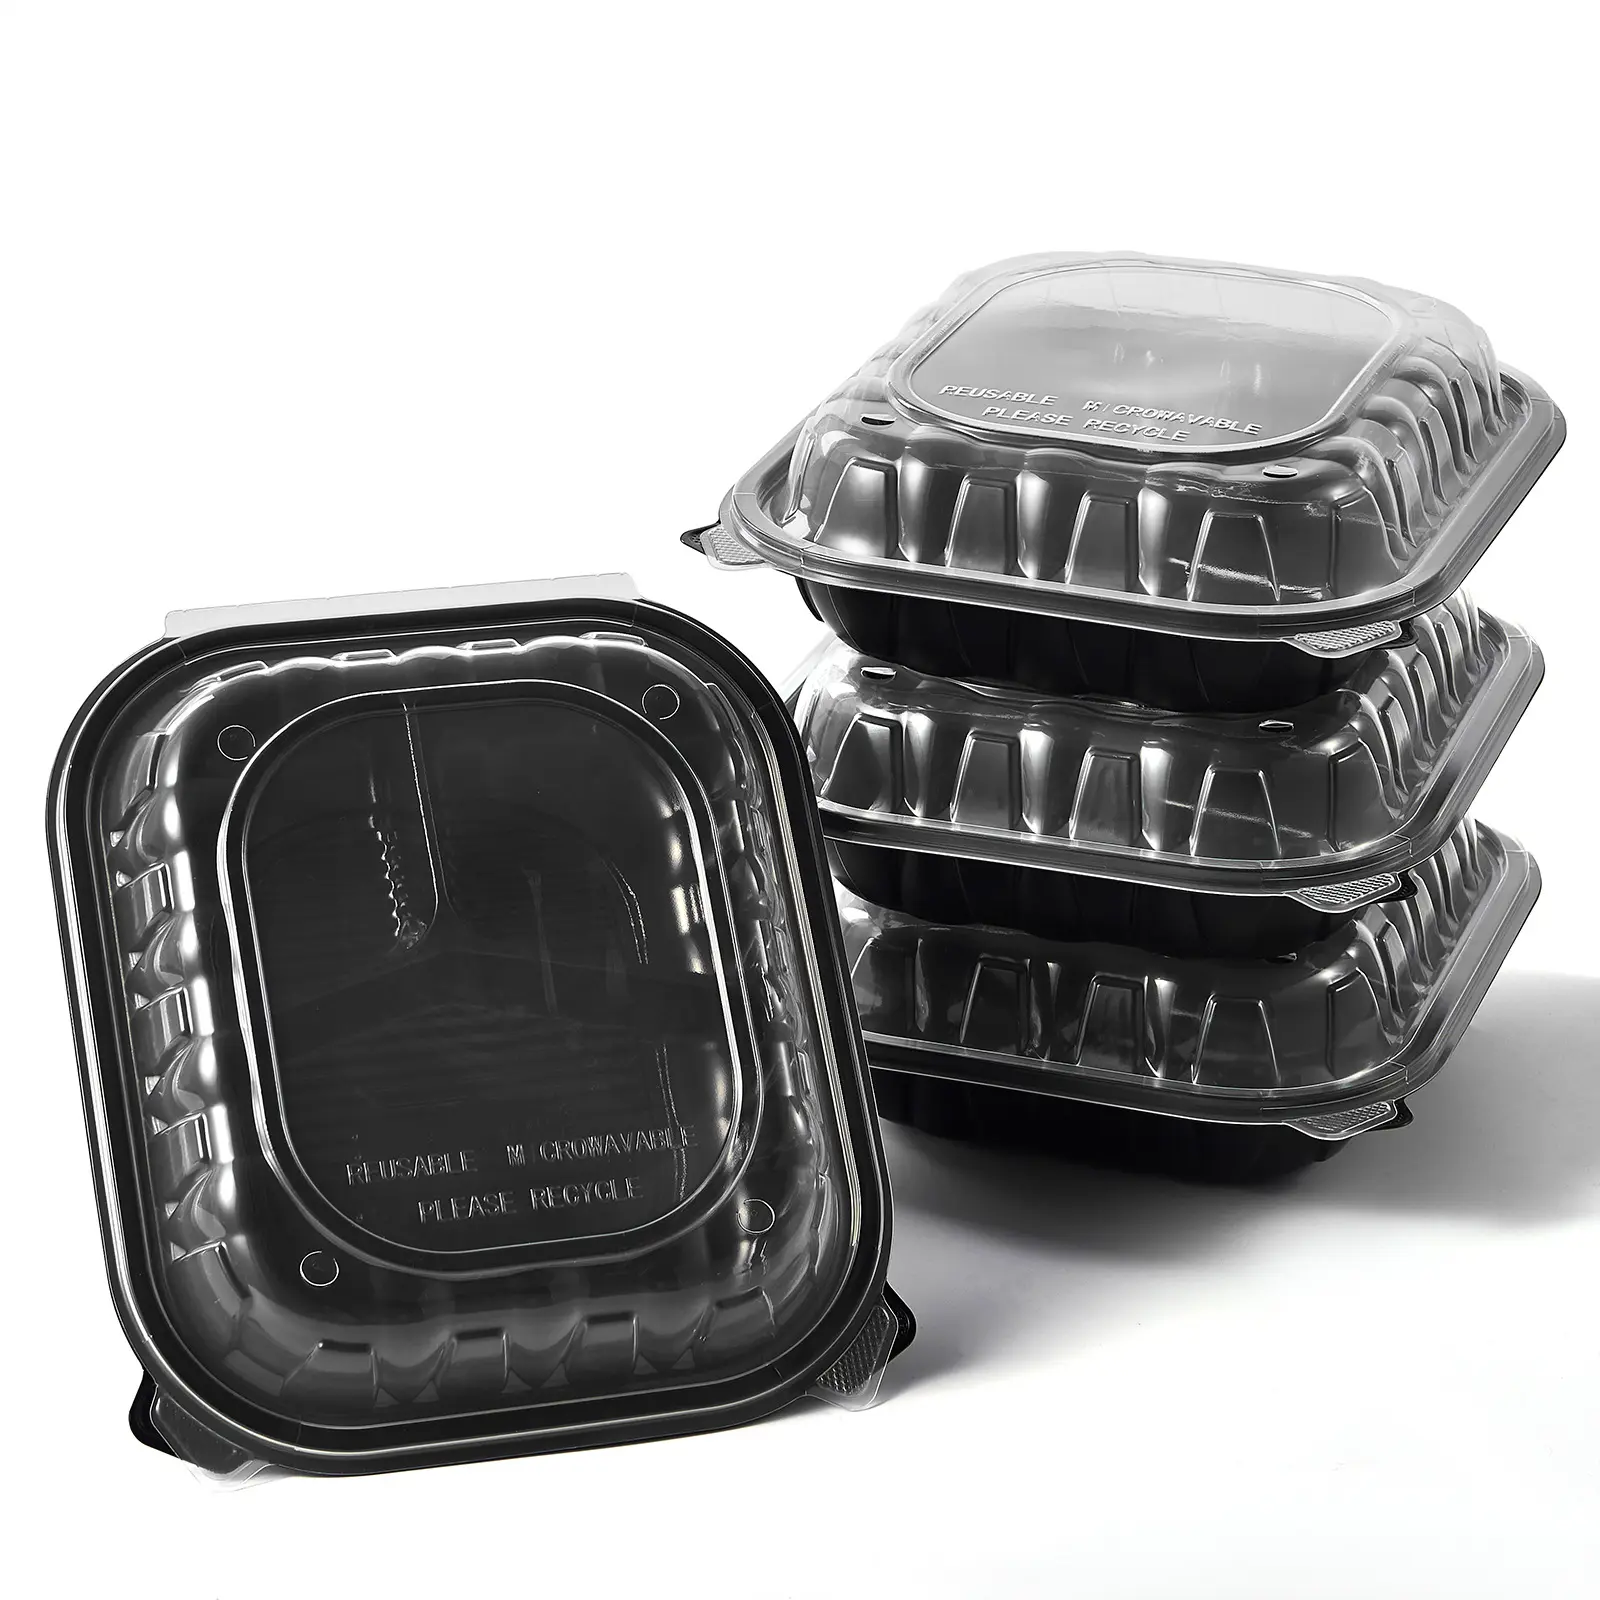 Contenedores Clamshell To Go Contenedor de alimentos de plástico transparente negro de doble color con tapa con bisagras